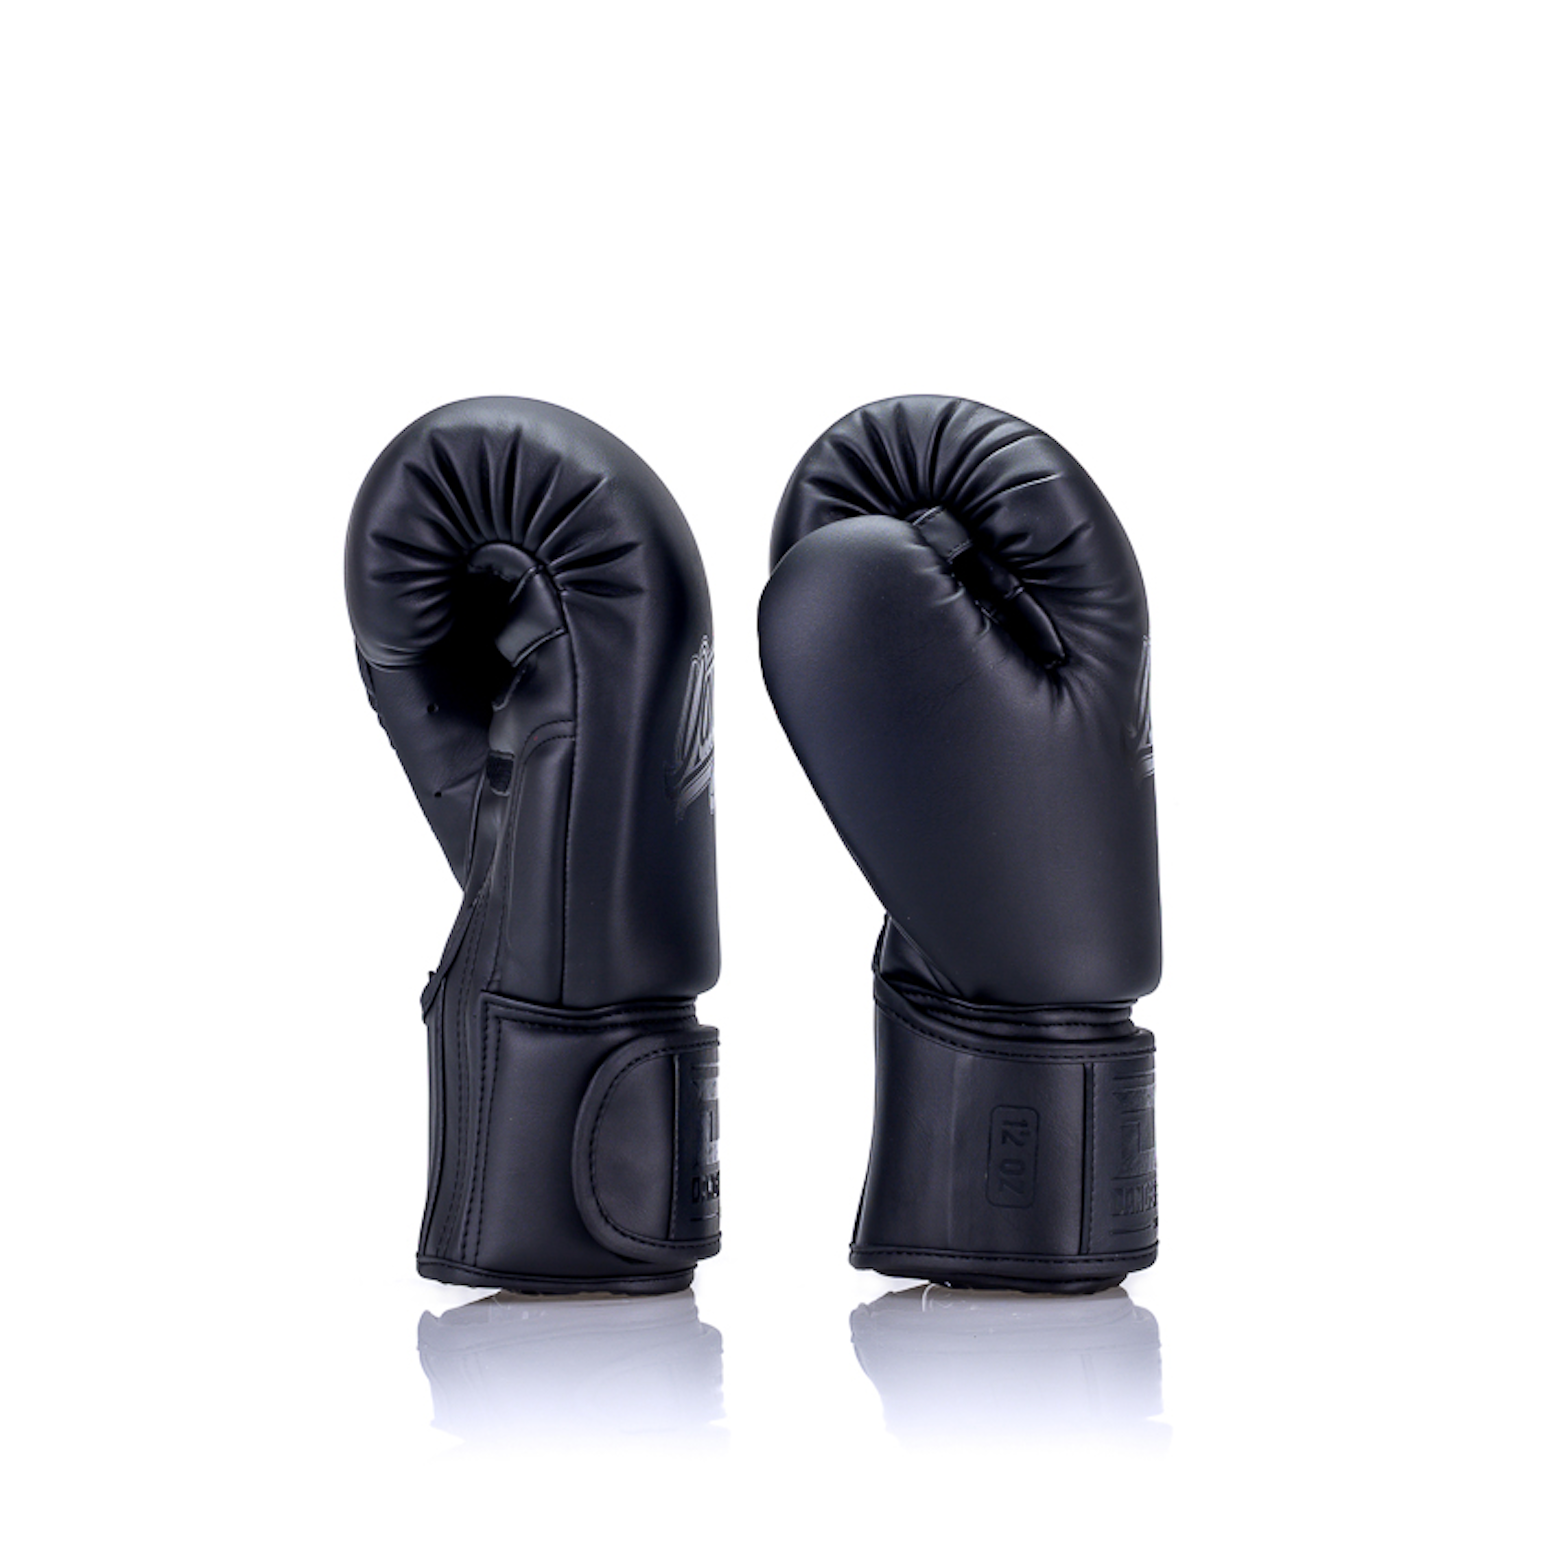 Black Danger Equipment Super Max Boxing Glove Semi-Leather Side